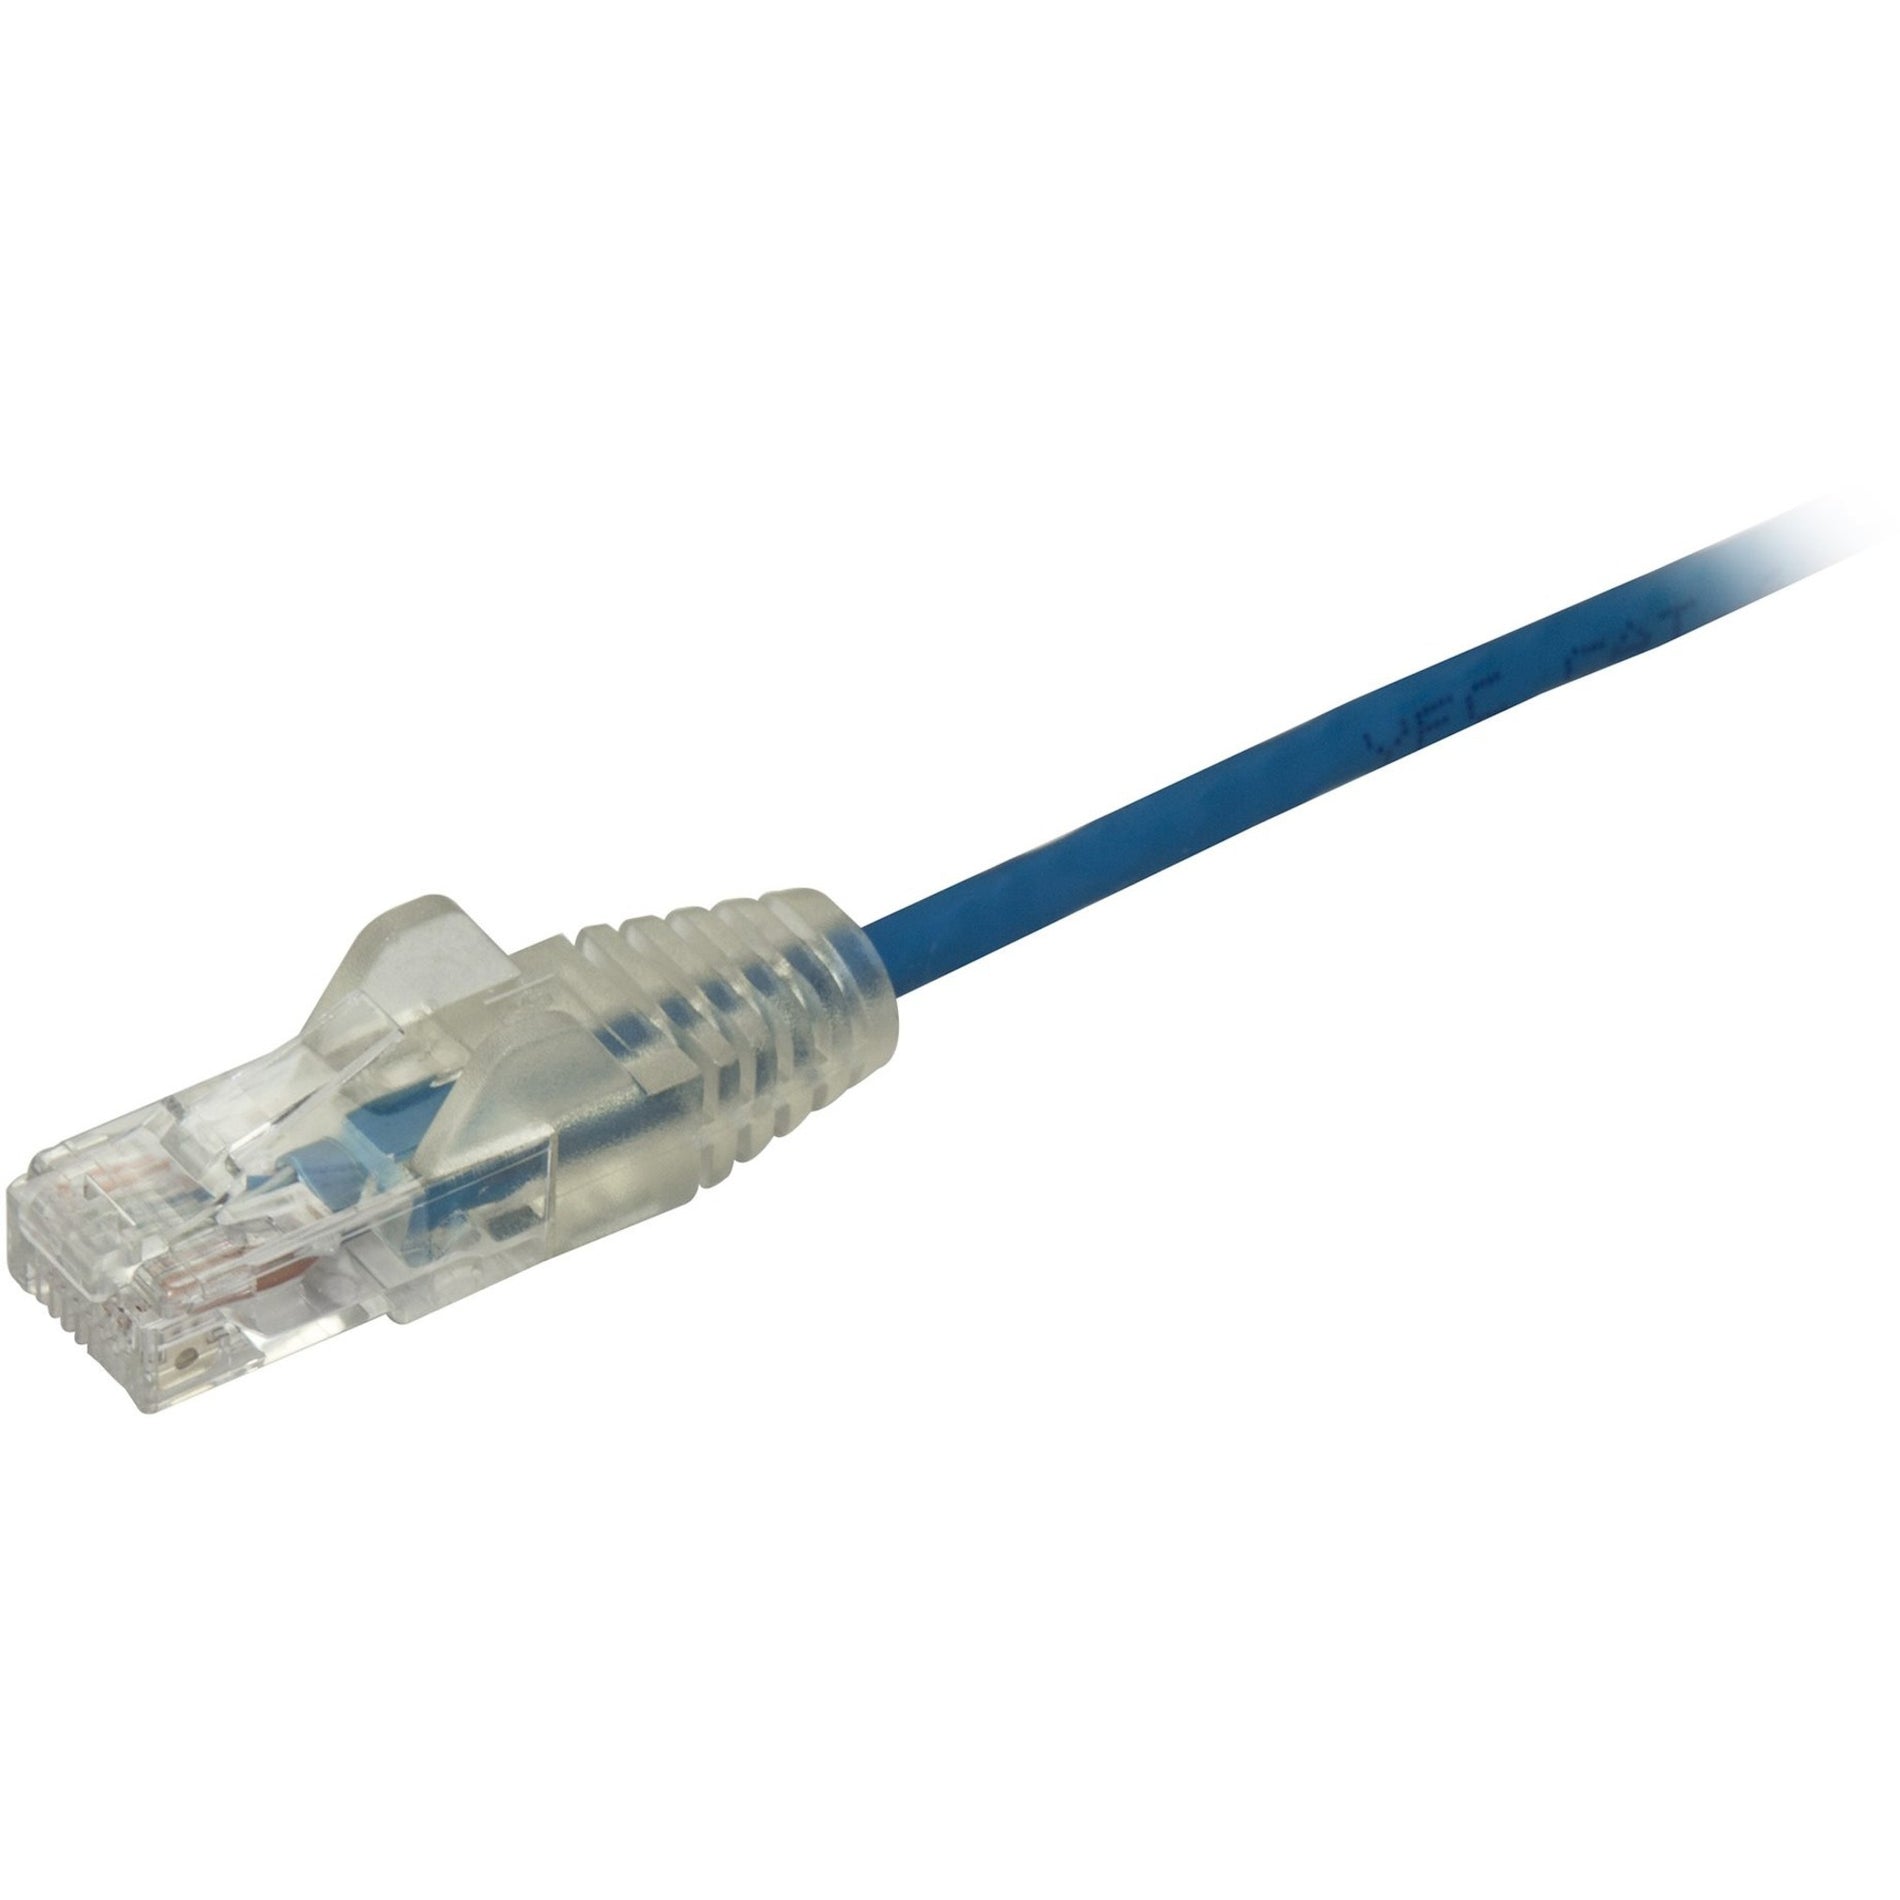 StarTech.com N6PAT1BLS Cat6 Patch Network Cable, 1 ft Blue Ethernet Cable - Slim, Snagless RJ45 Connectors, Cat6 Cable, Cat6 Patch Cable, Cat6 Network Cable